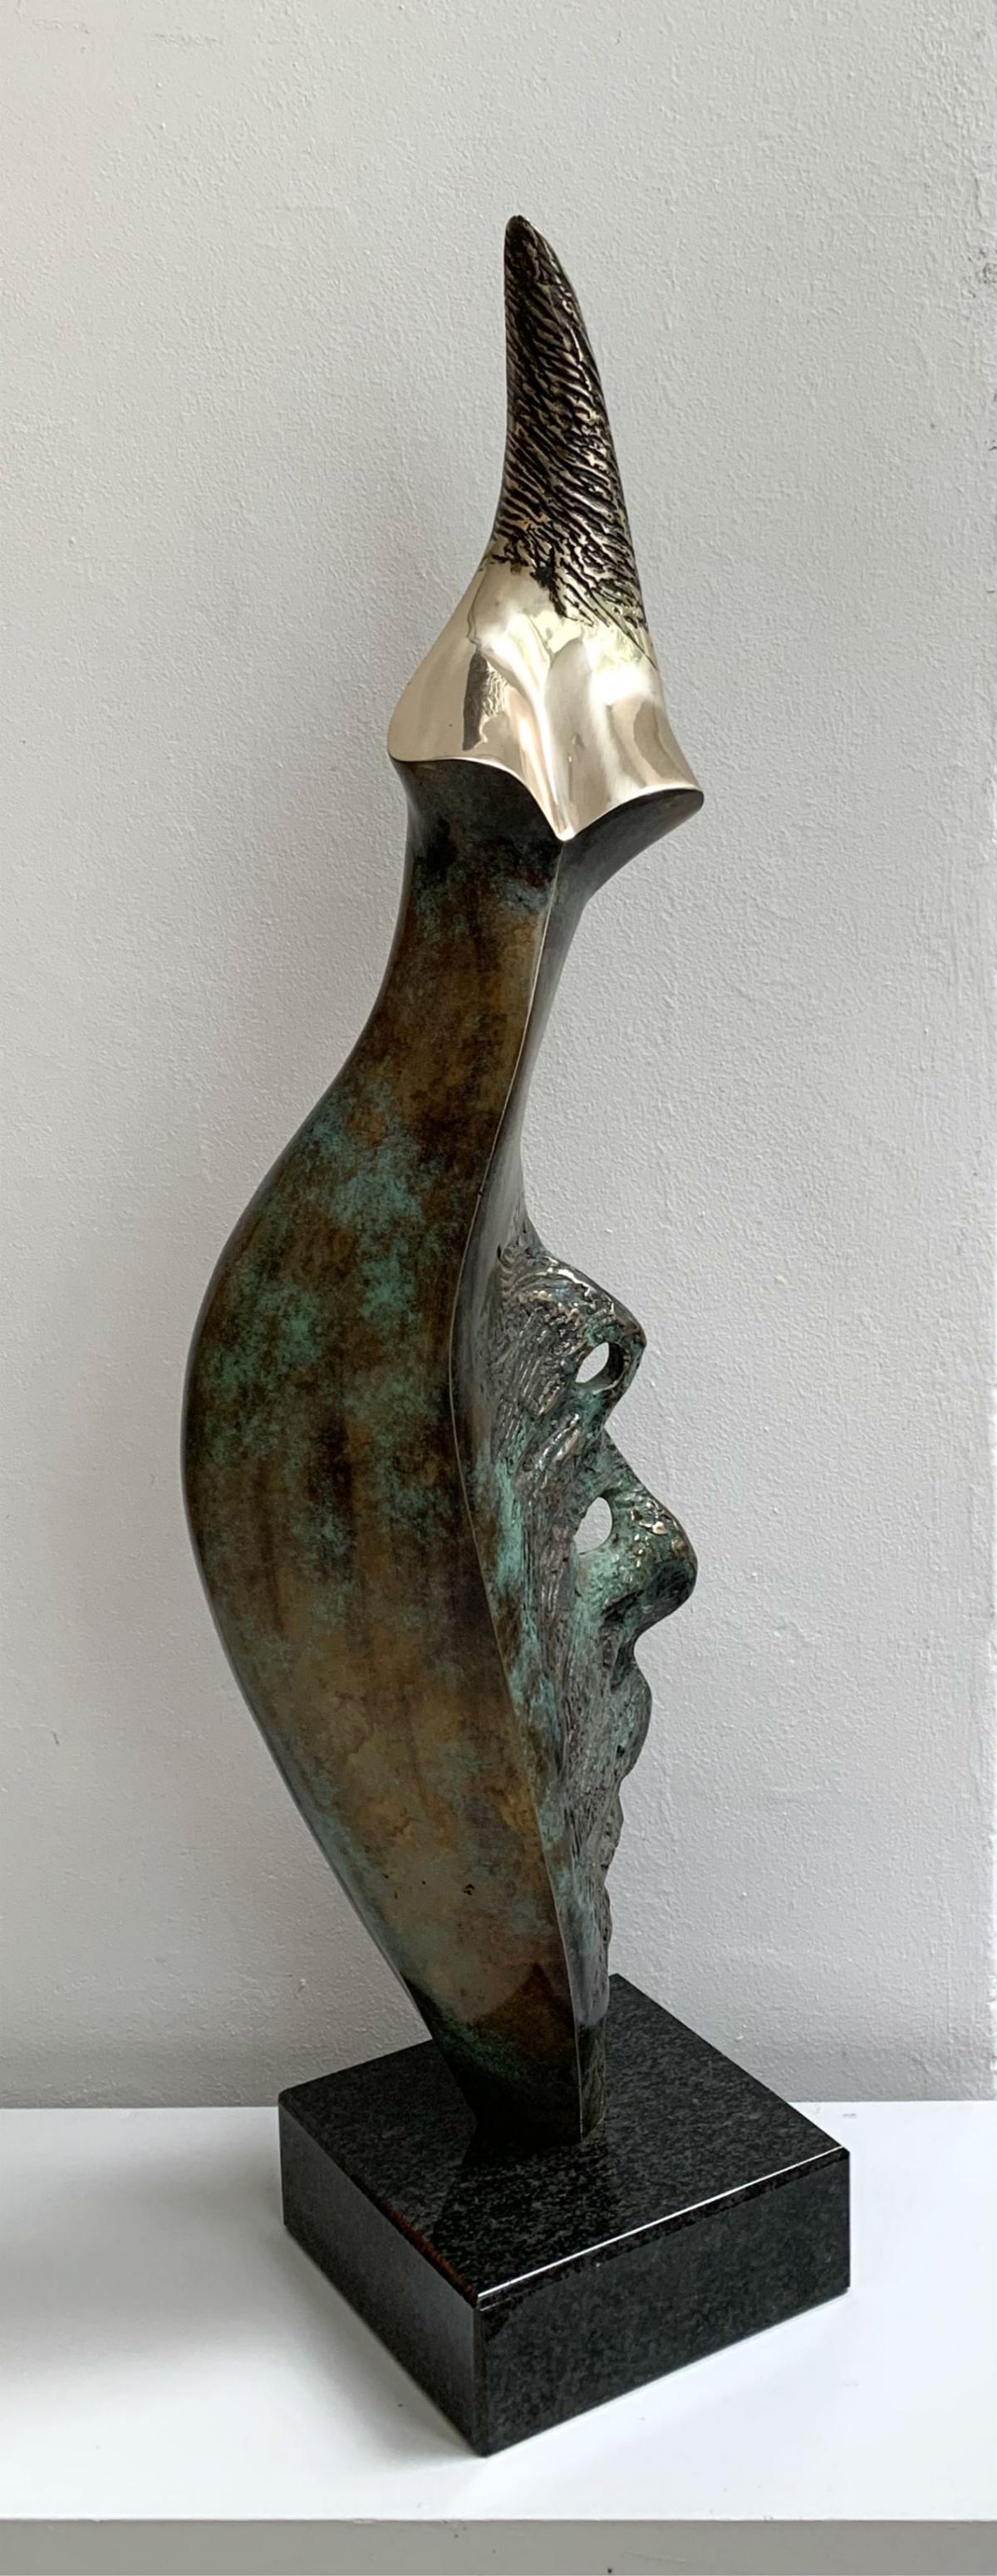 Aphrodite - XXI century Contemporary bronze sculpture, Abstract & figurative - Sculpture by Stanisław Wysocki